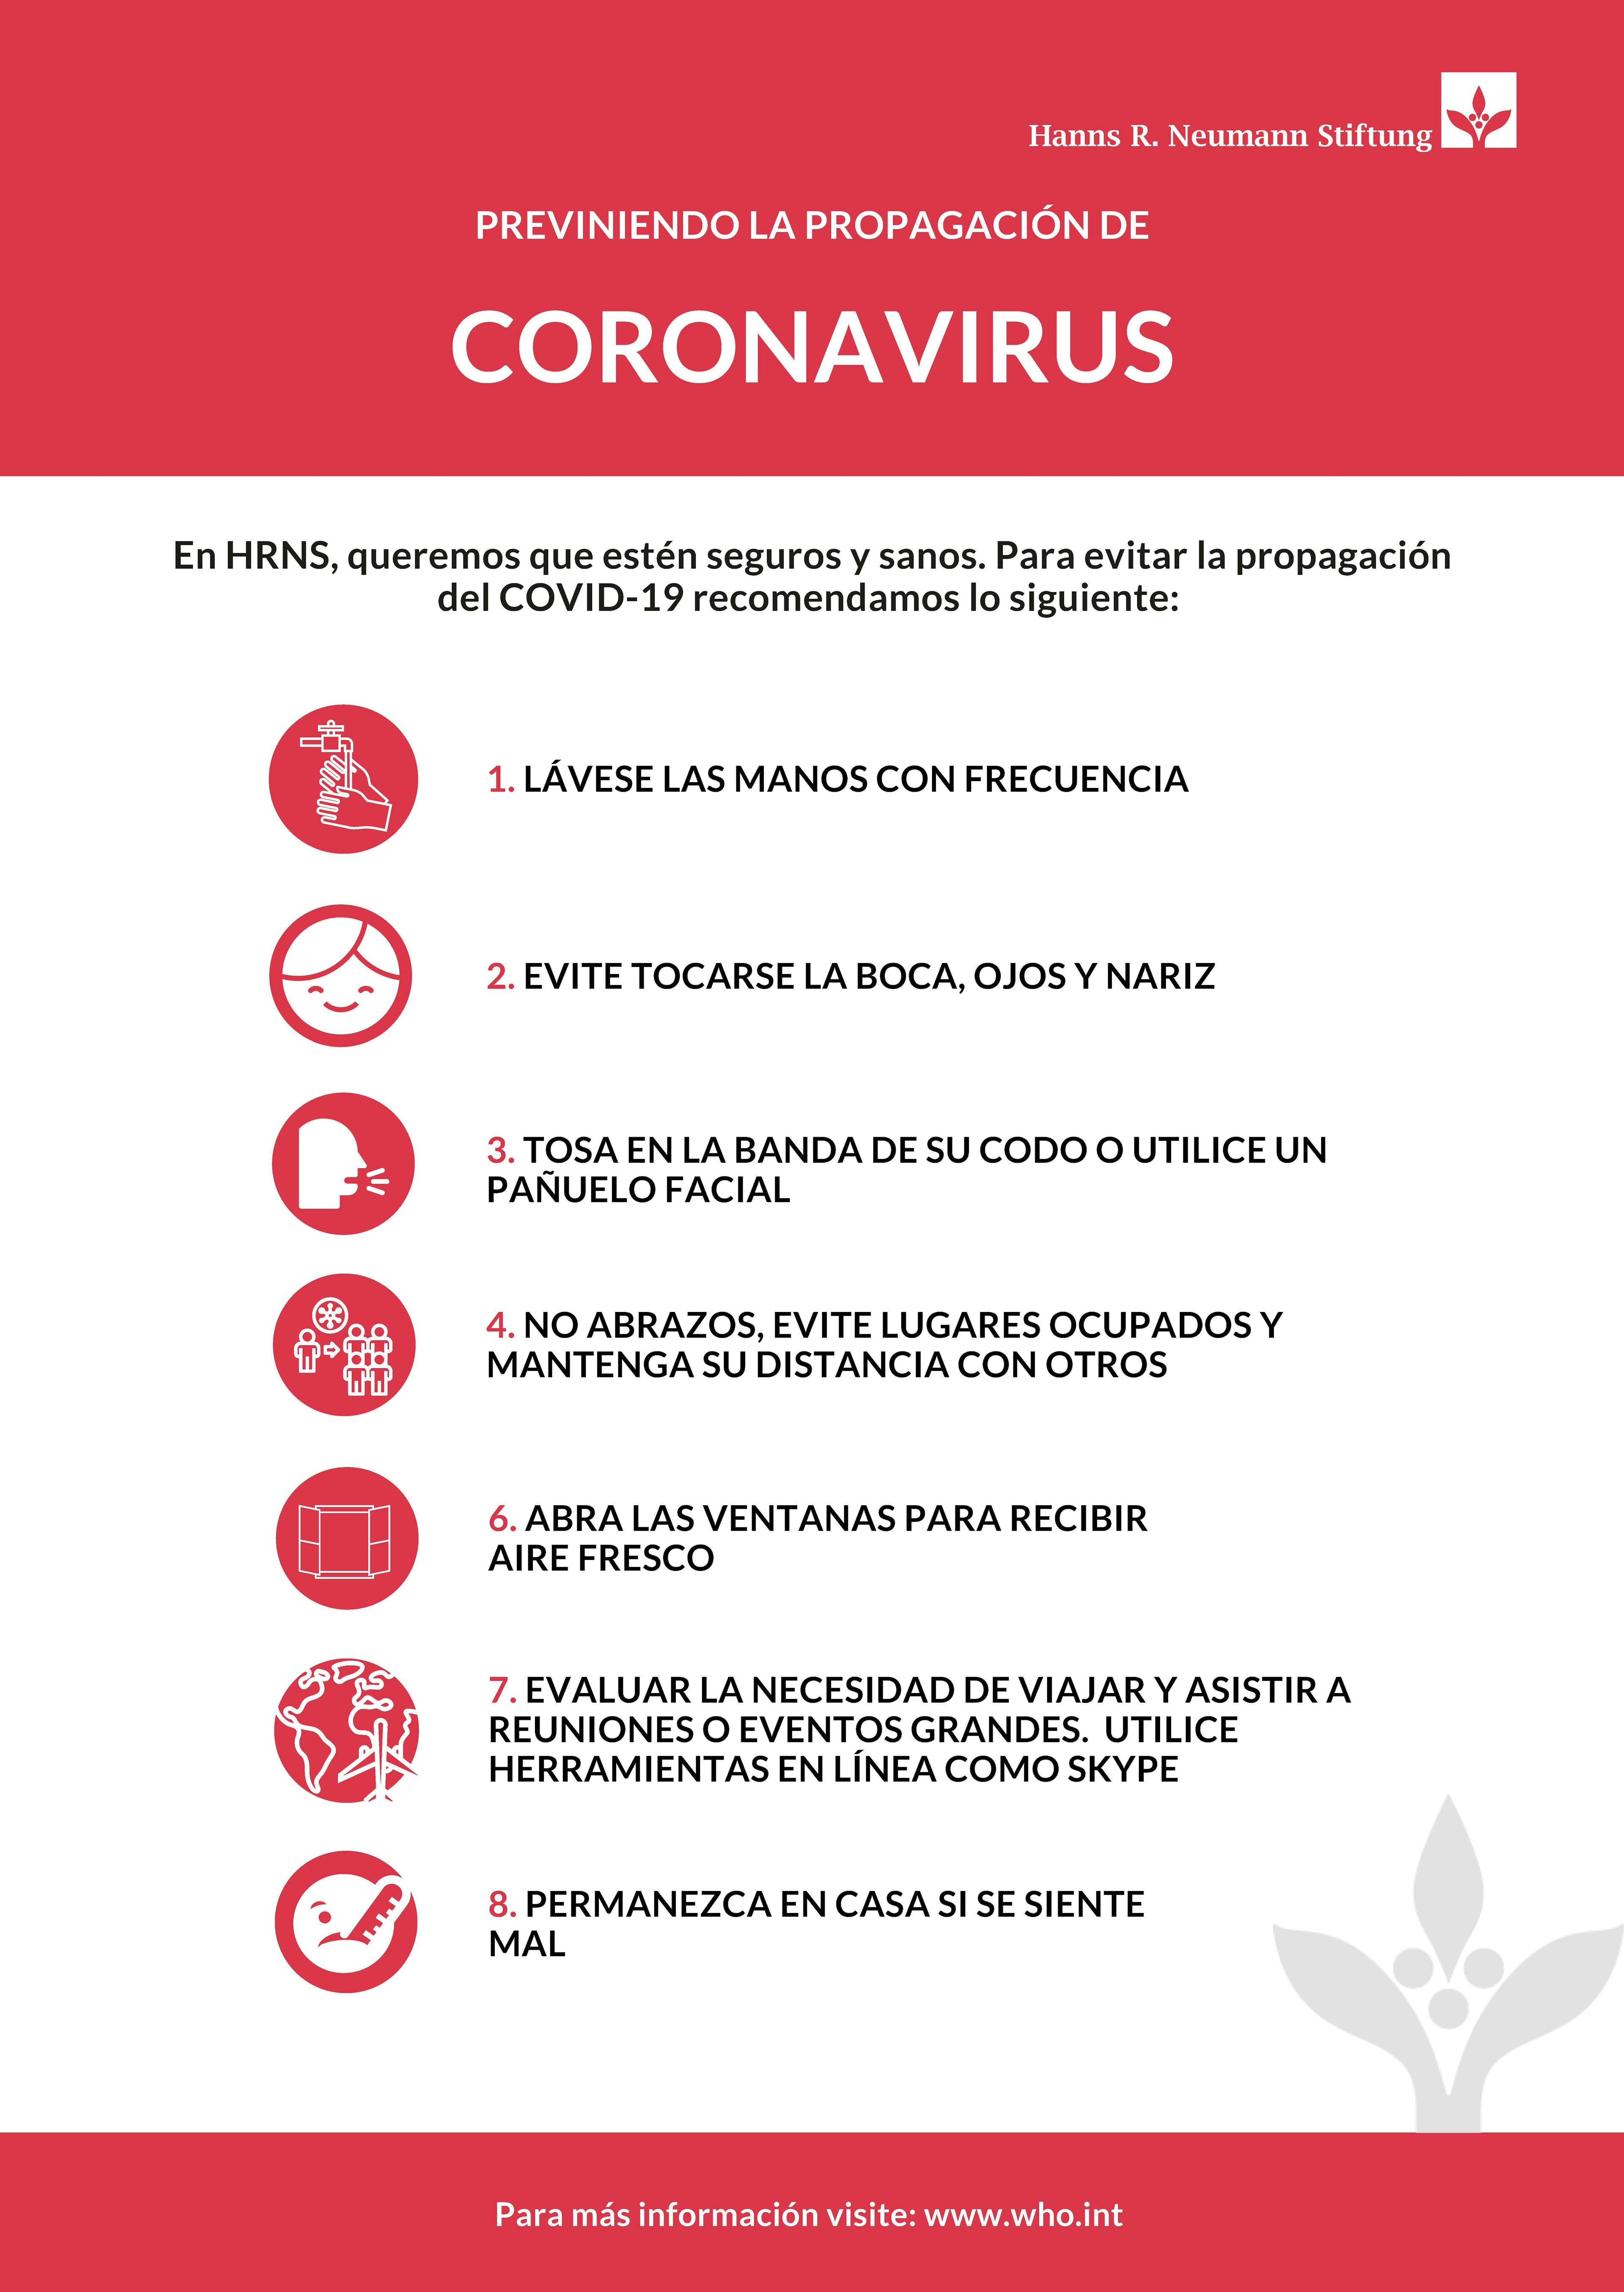 Preventing the spread of Coronavirus in Spanish